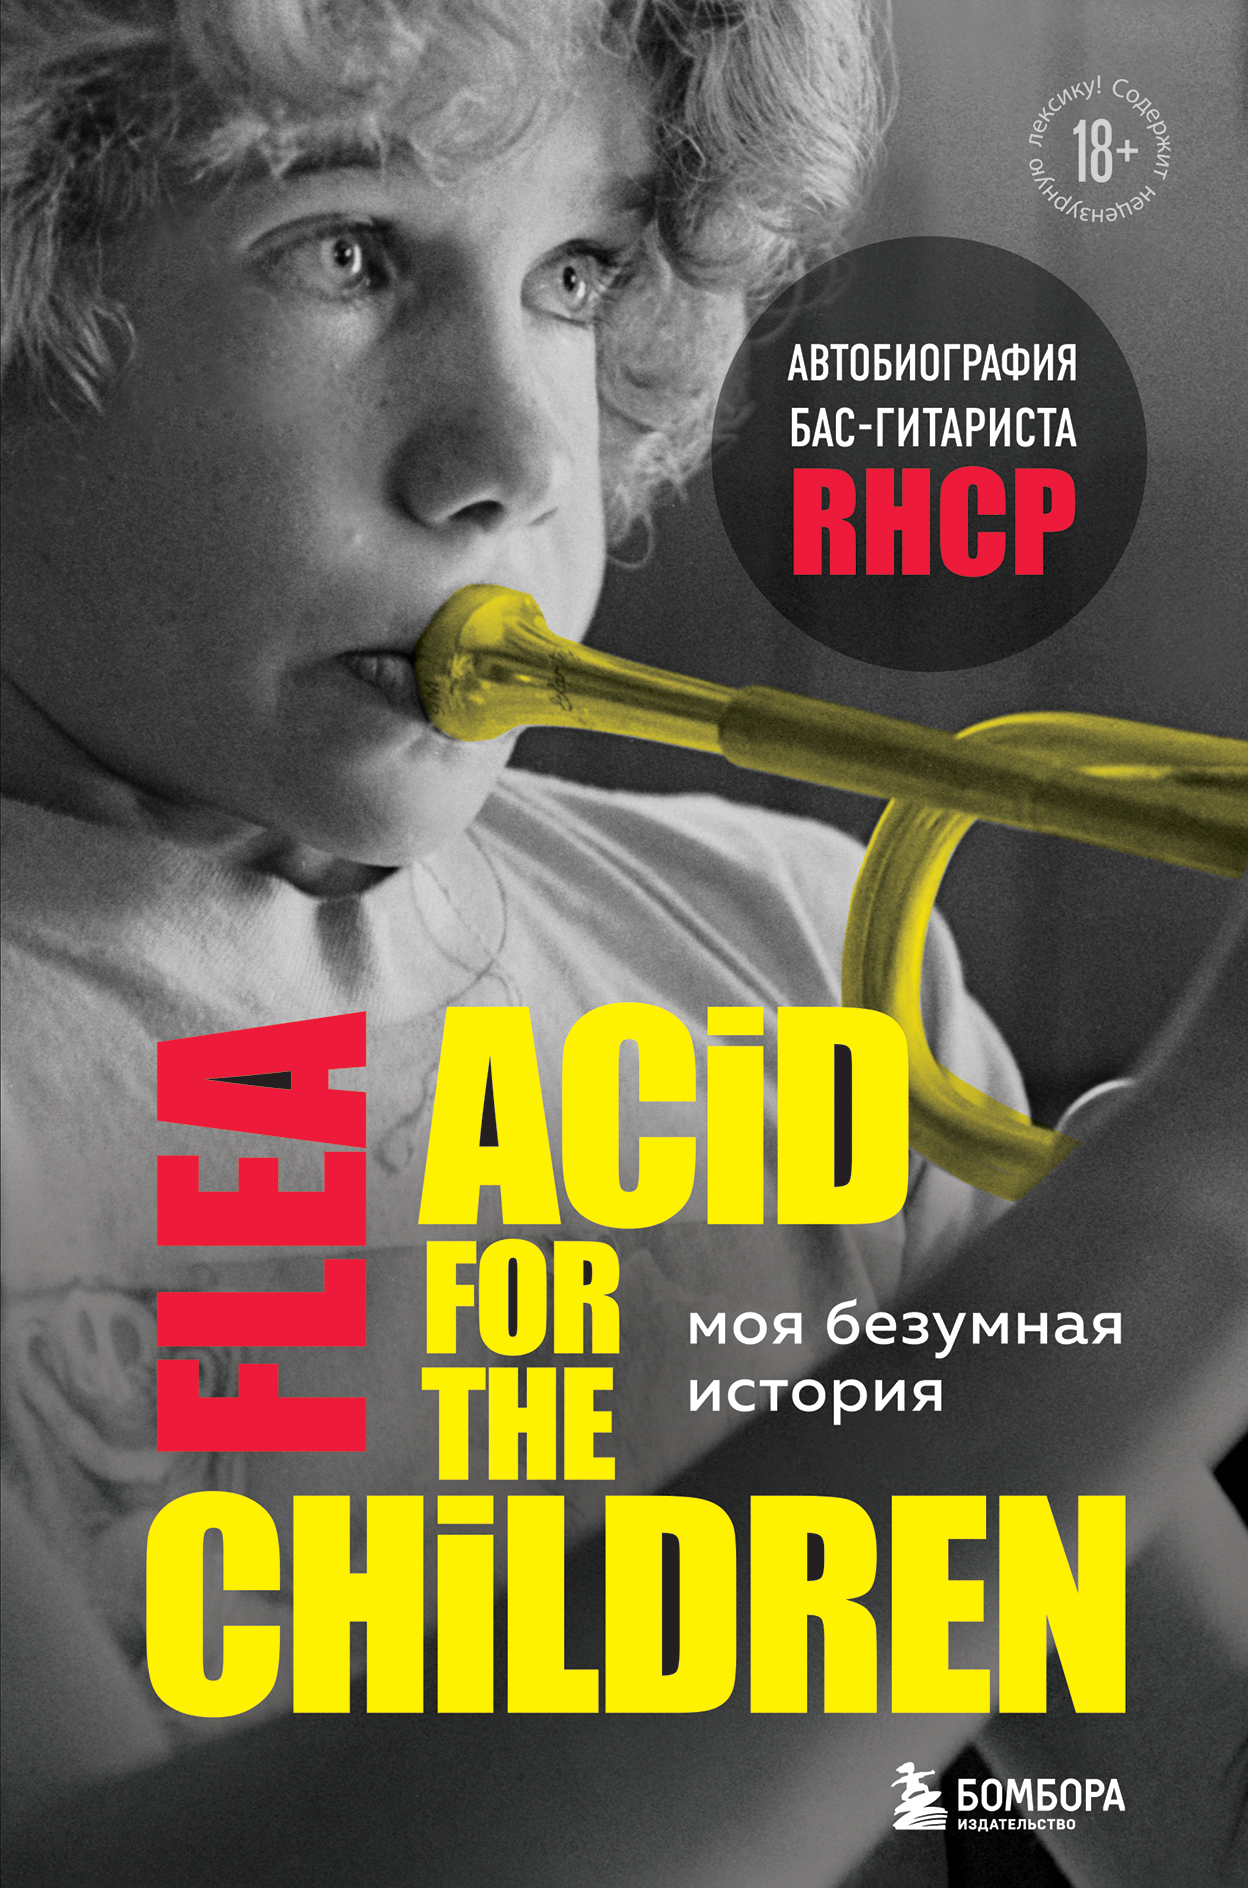  .   :  - RHCP (Acid for the children) 